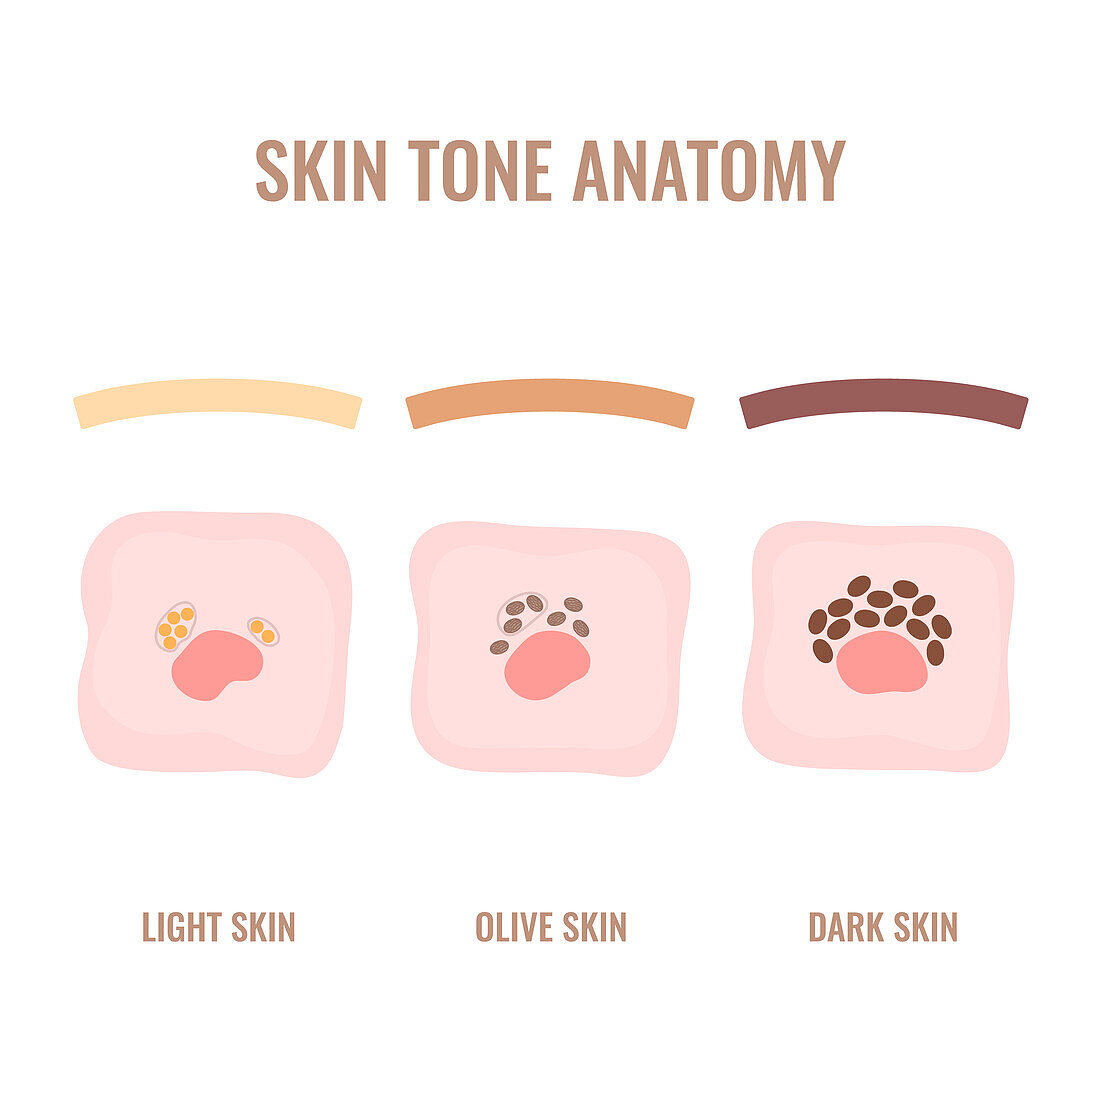 Skin pigmentation, conceptual illustration